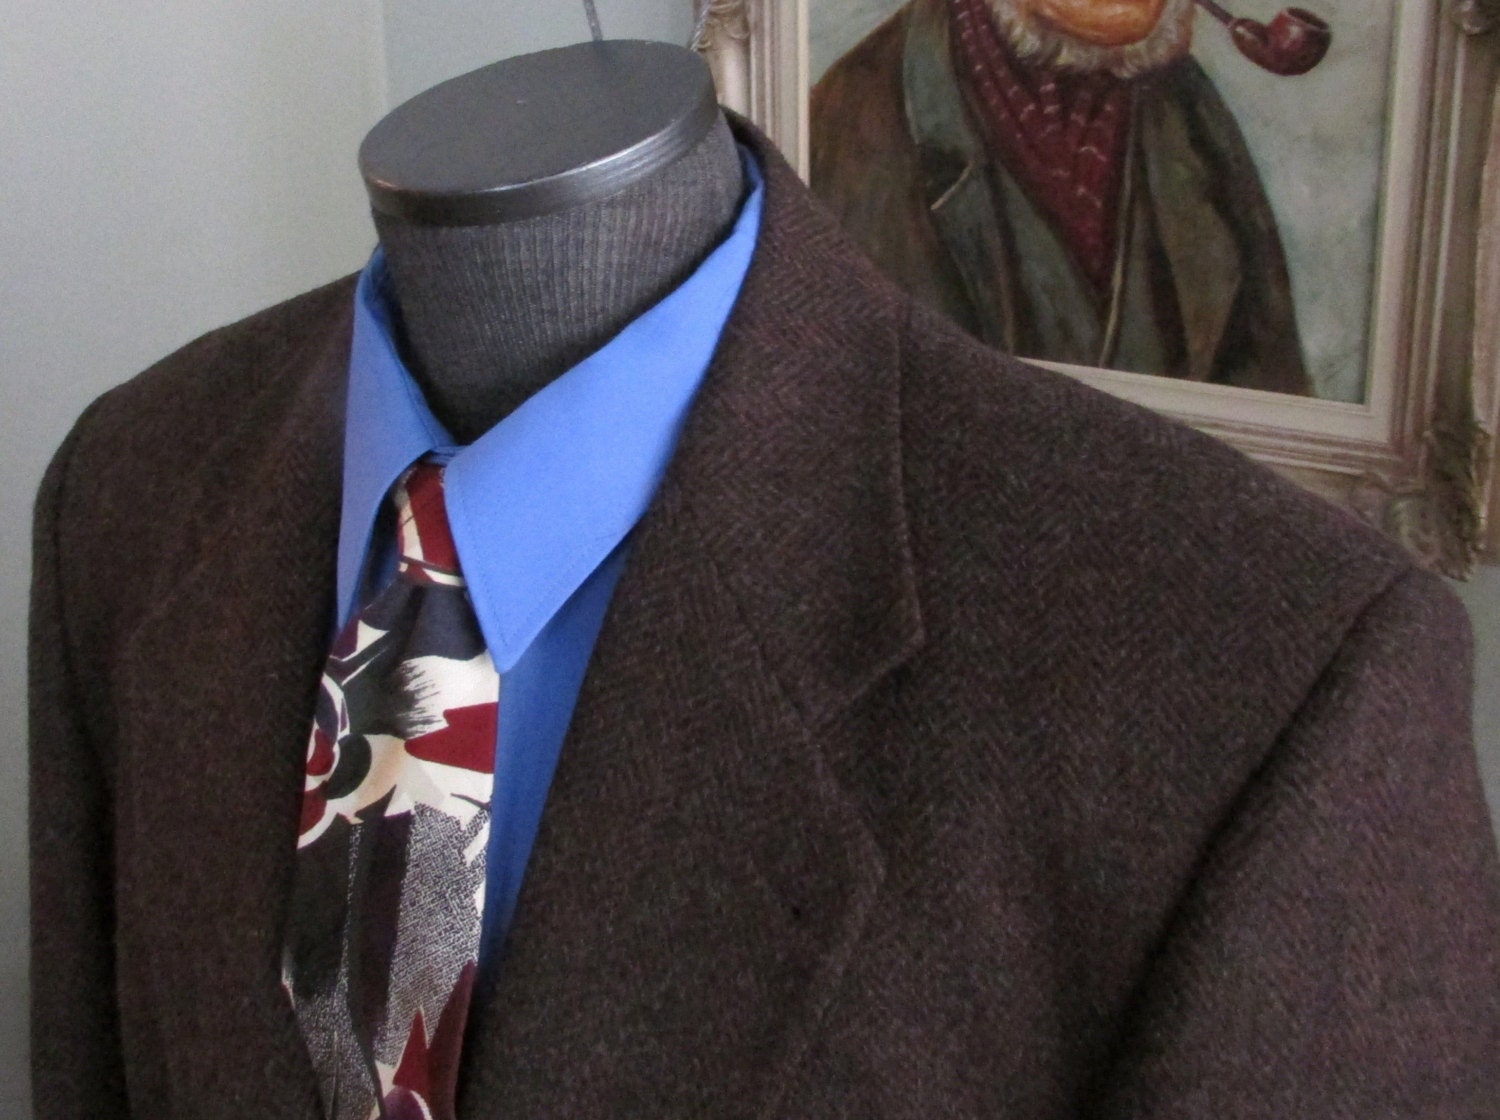 Chaps by Ralph Lauren Vintage 70's Tweed Plaid Wool Blazer. Rare Suit  Jacket.